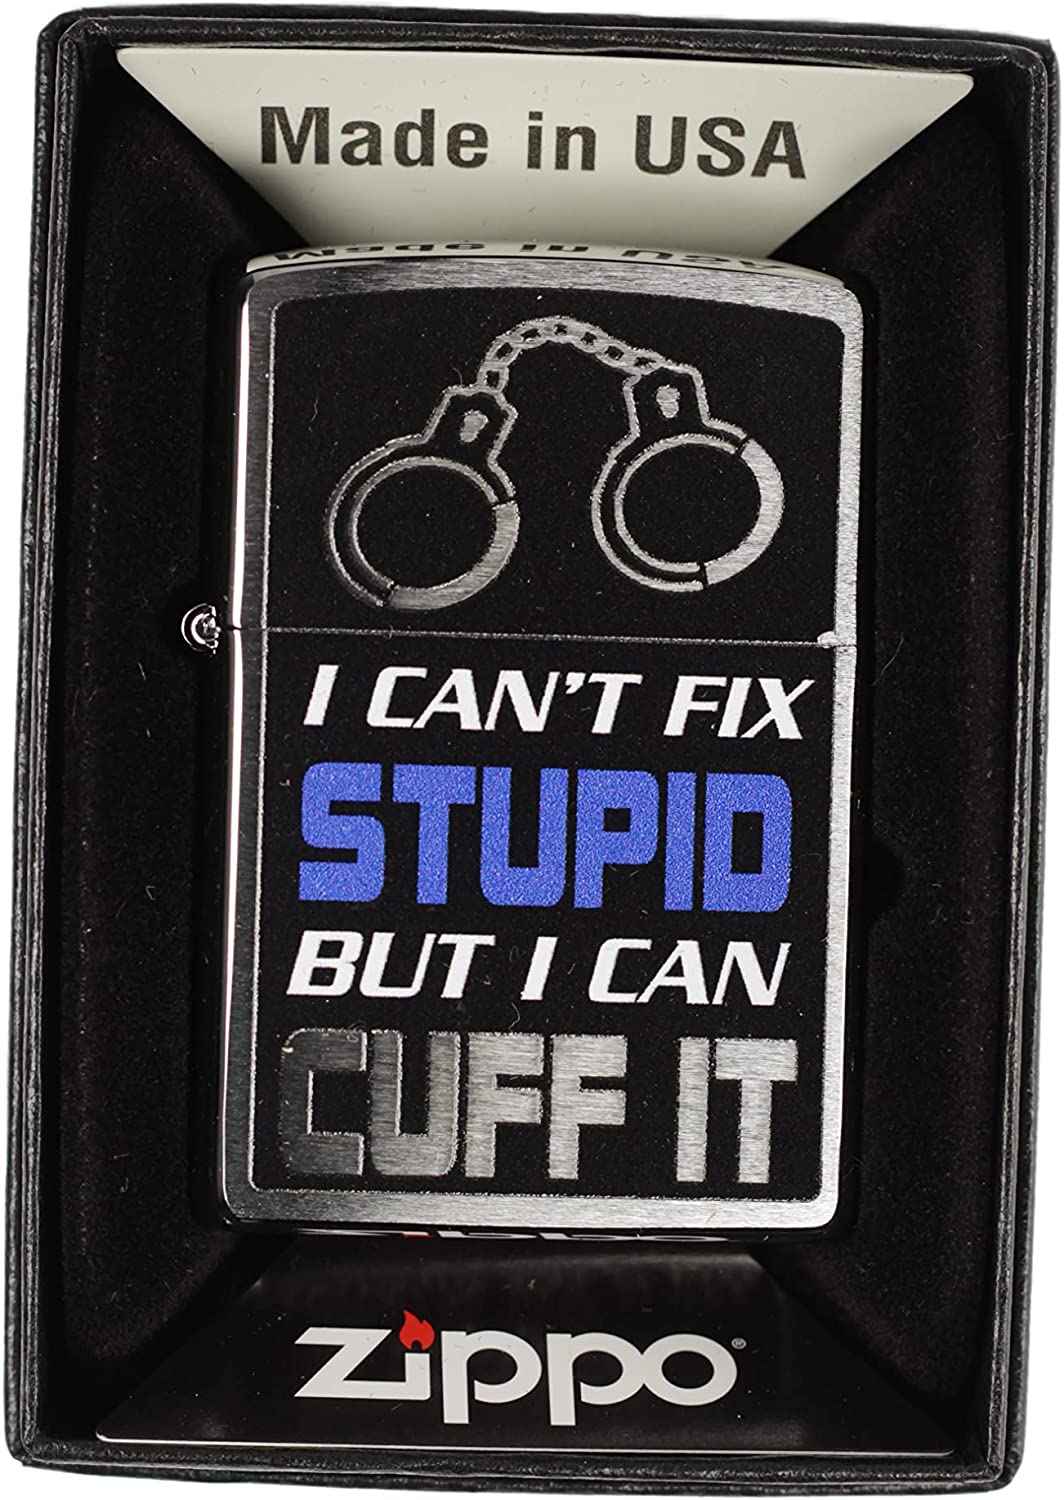 I Can't Fix Stupid But I Can Cuff It" Handcuffs Design - Brushed Chrome Zippo Lighter